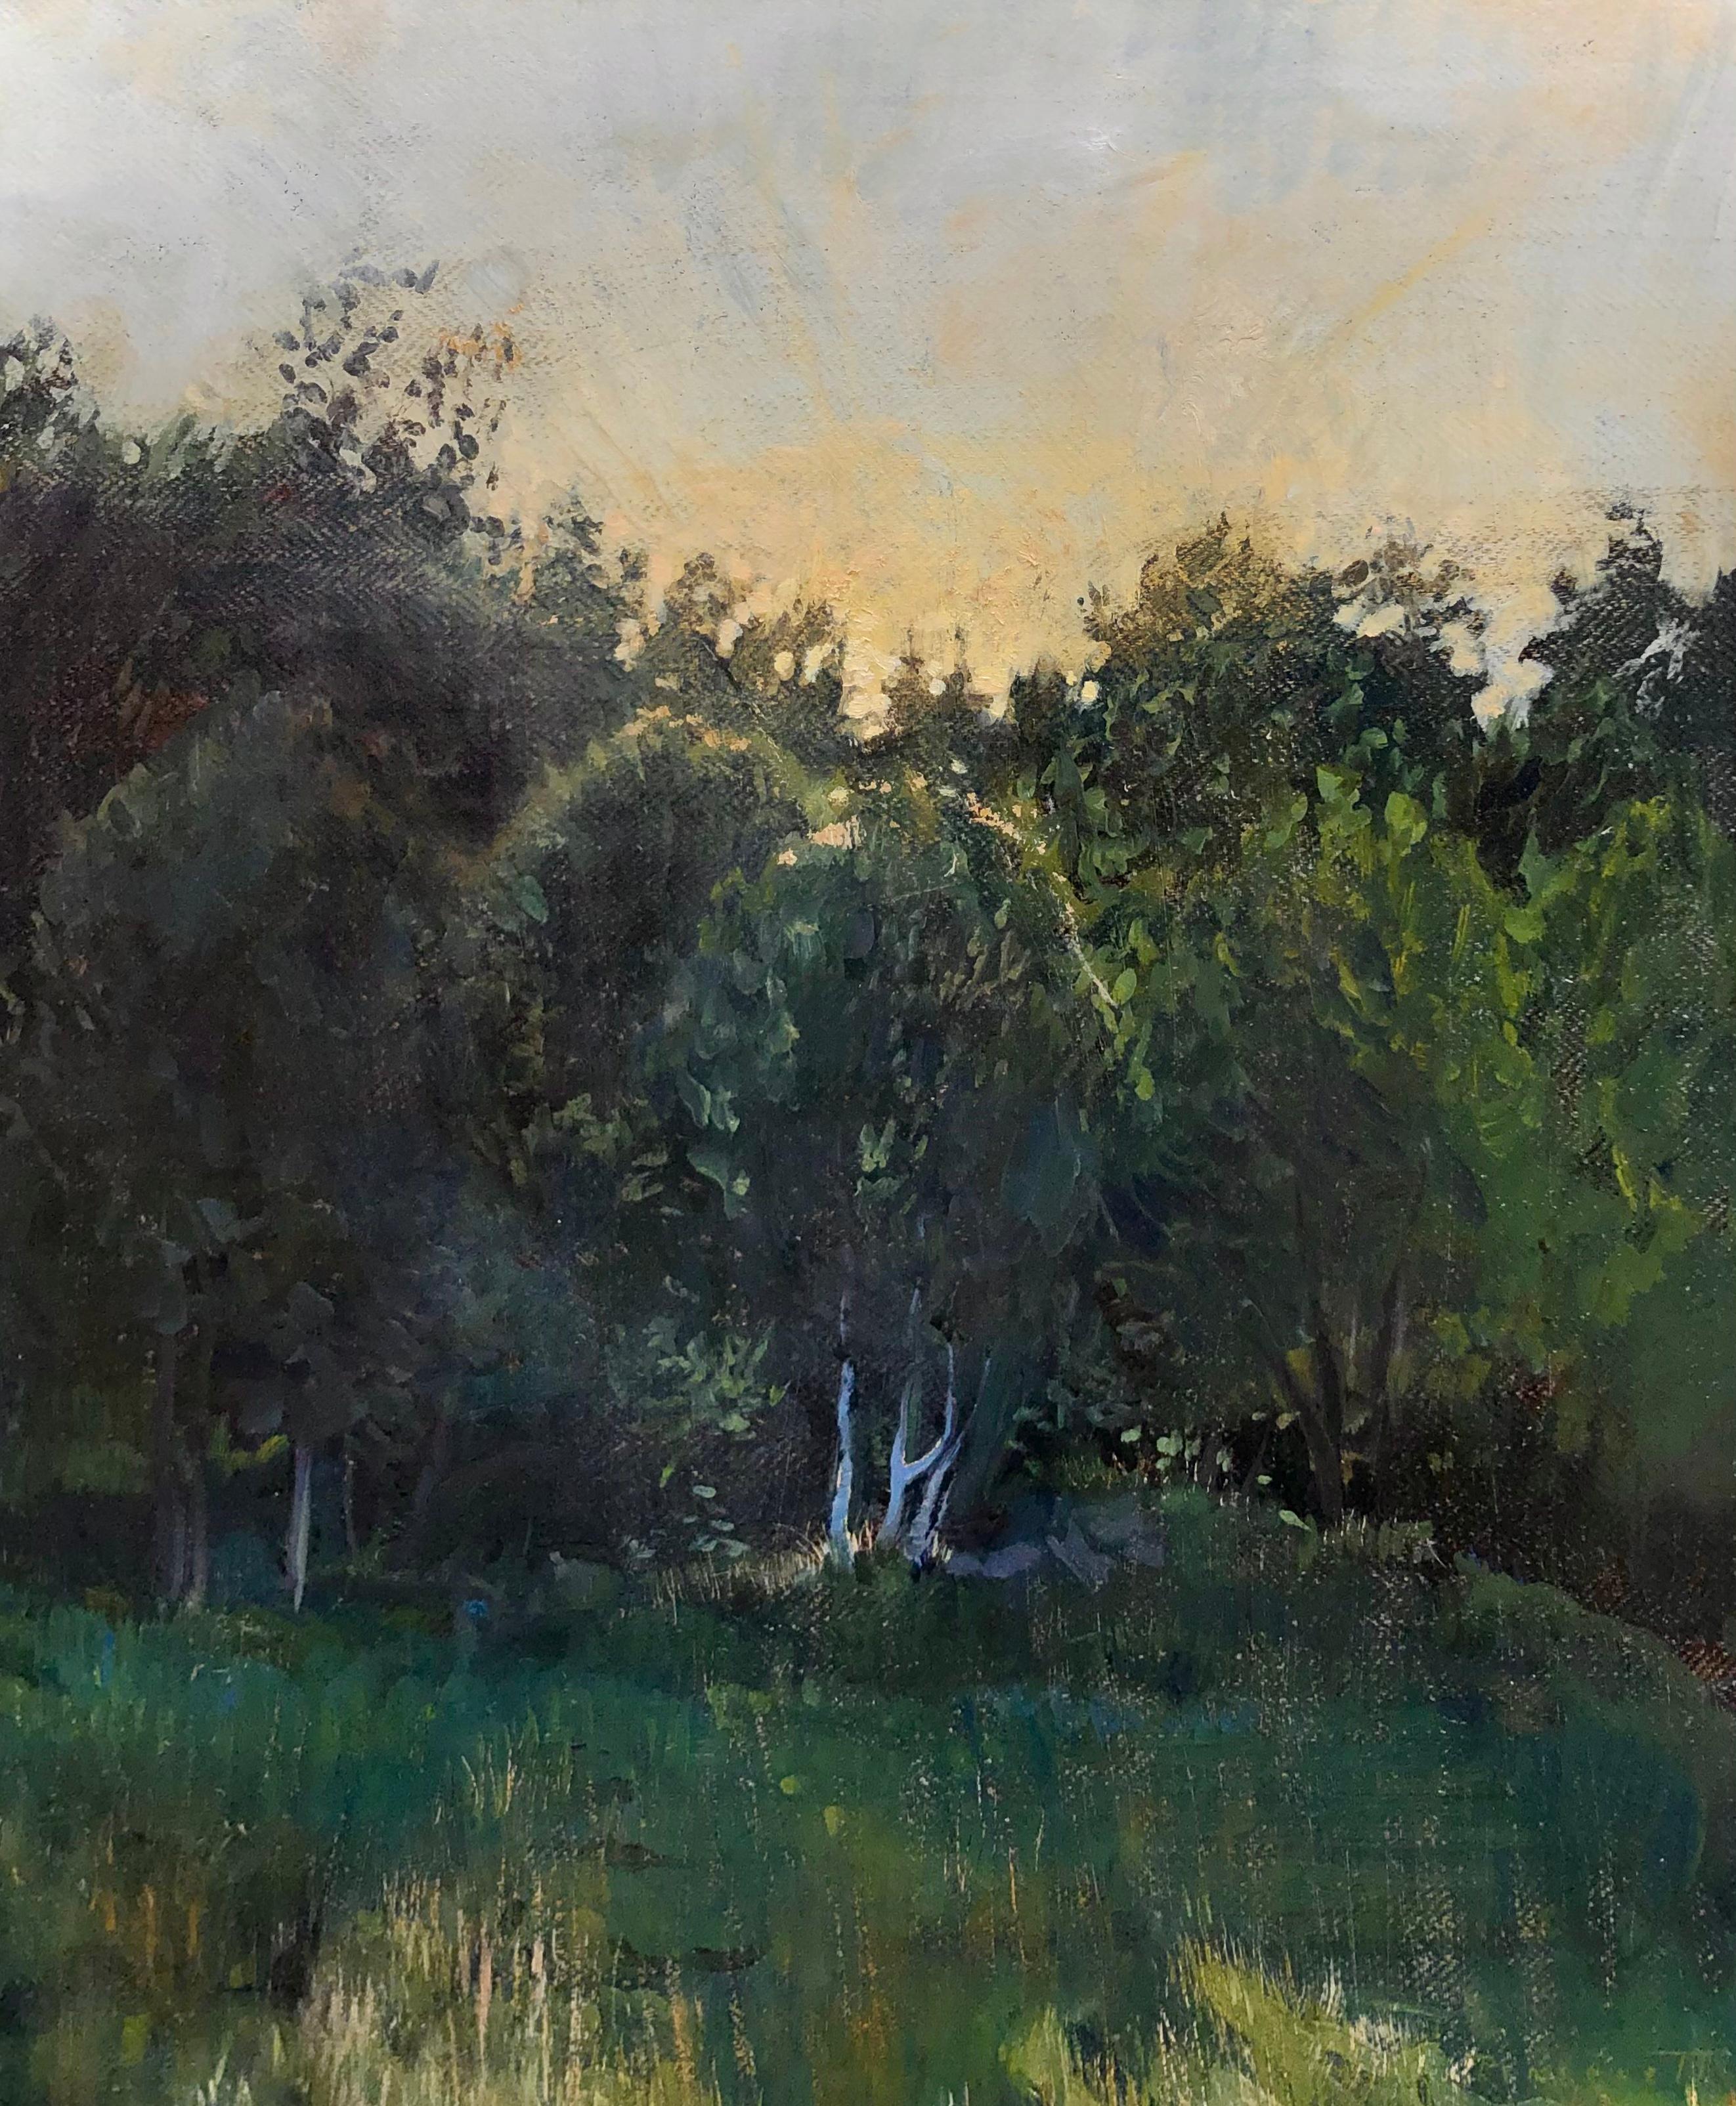 Rachel Personett Still-Life Painting - "Norwegian Sunset" contemporary tonalist painting - sun sets beyond green trees